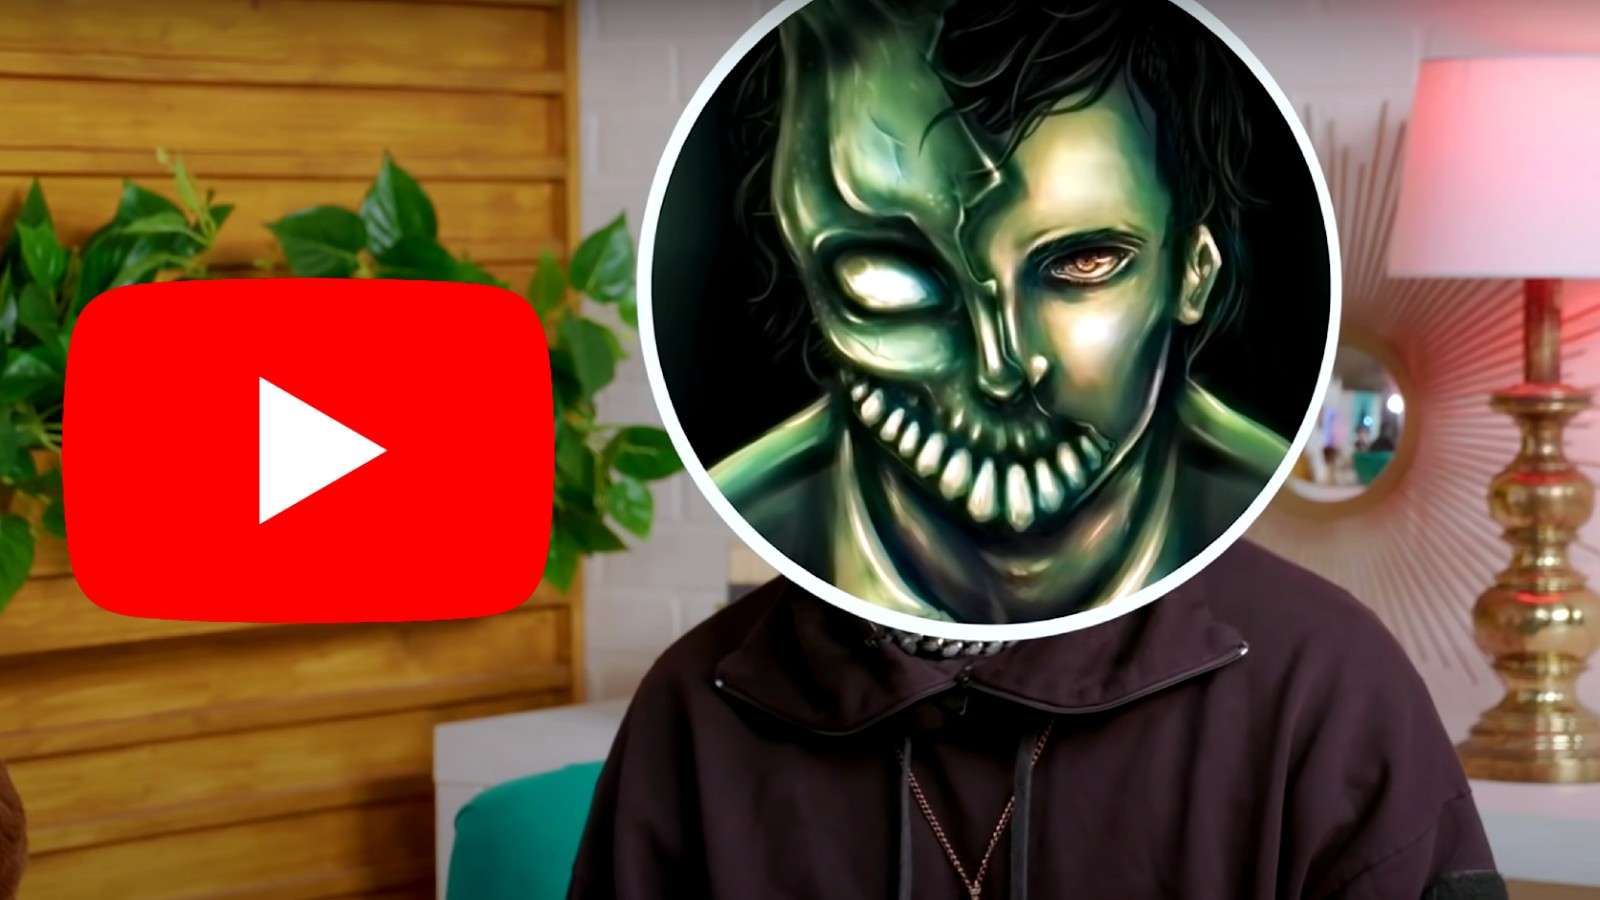 Corpse Husband's avatar next to the YouTube logo